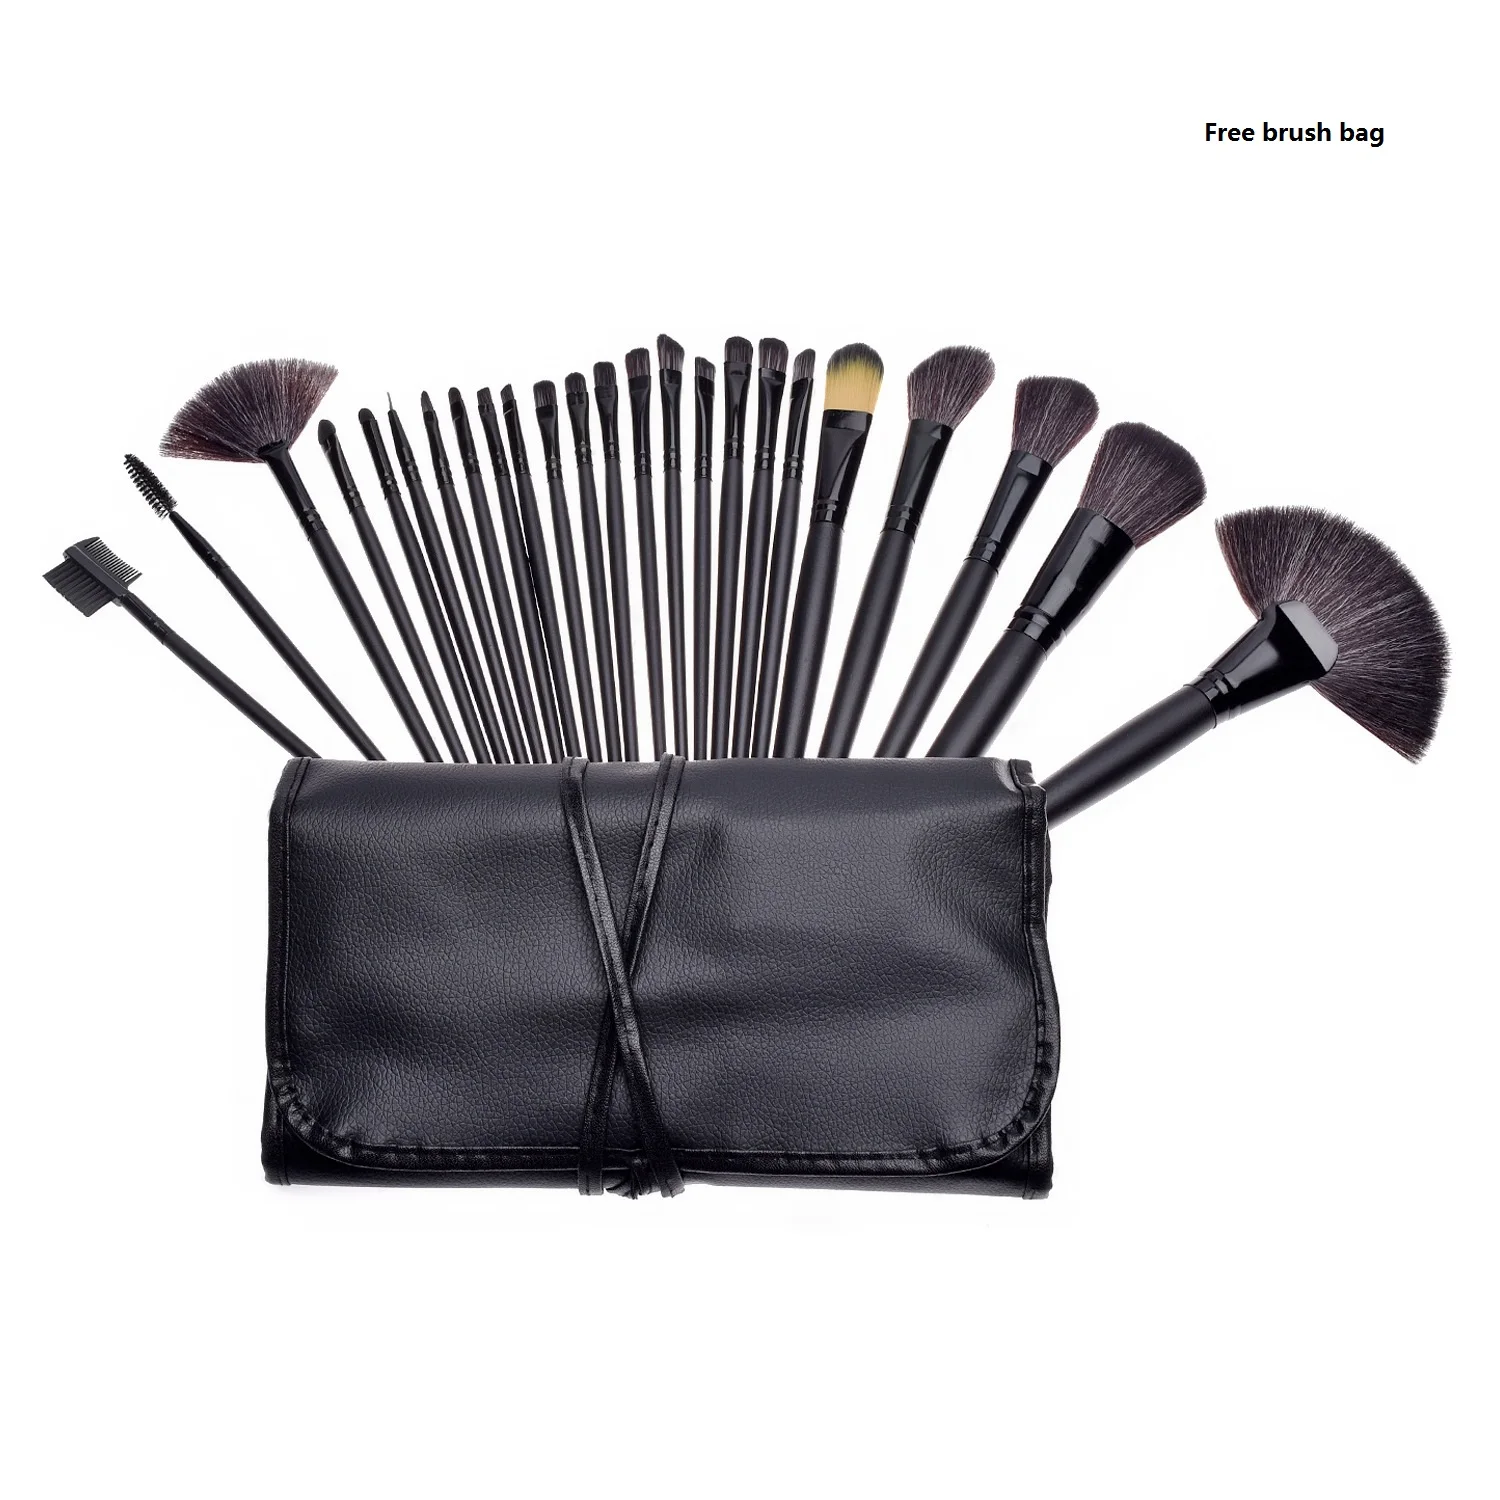 24PCS Professional Makeup Brush Set Eye Makeup Complete Kit Cosmetics Beauty Concealer Brush Makeup Artist Brush Tool